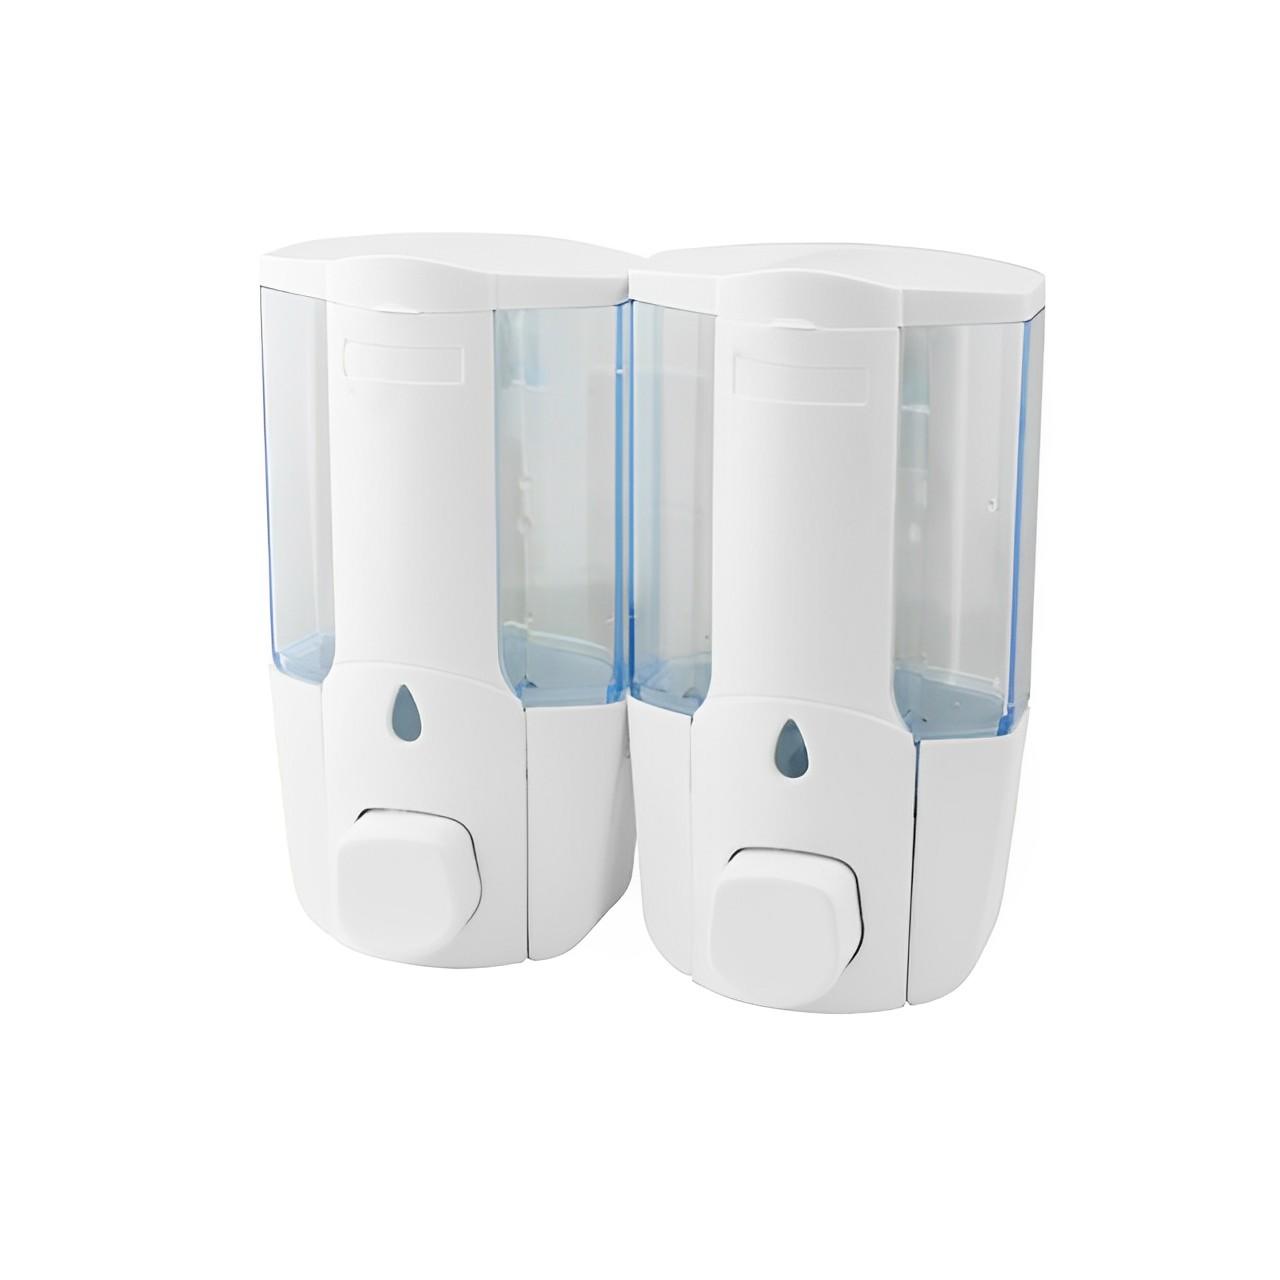 OJ-YL17W-D 10.15oz(300ml)*2 Double Manual Commercial Soap Dispenser for Liquid Shampoo Plastic Liquid Soap Dispenser